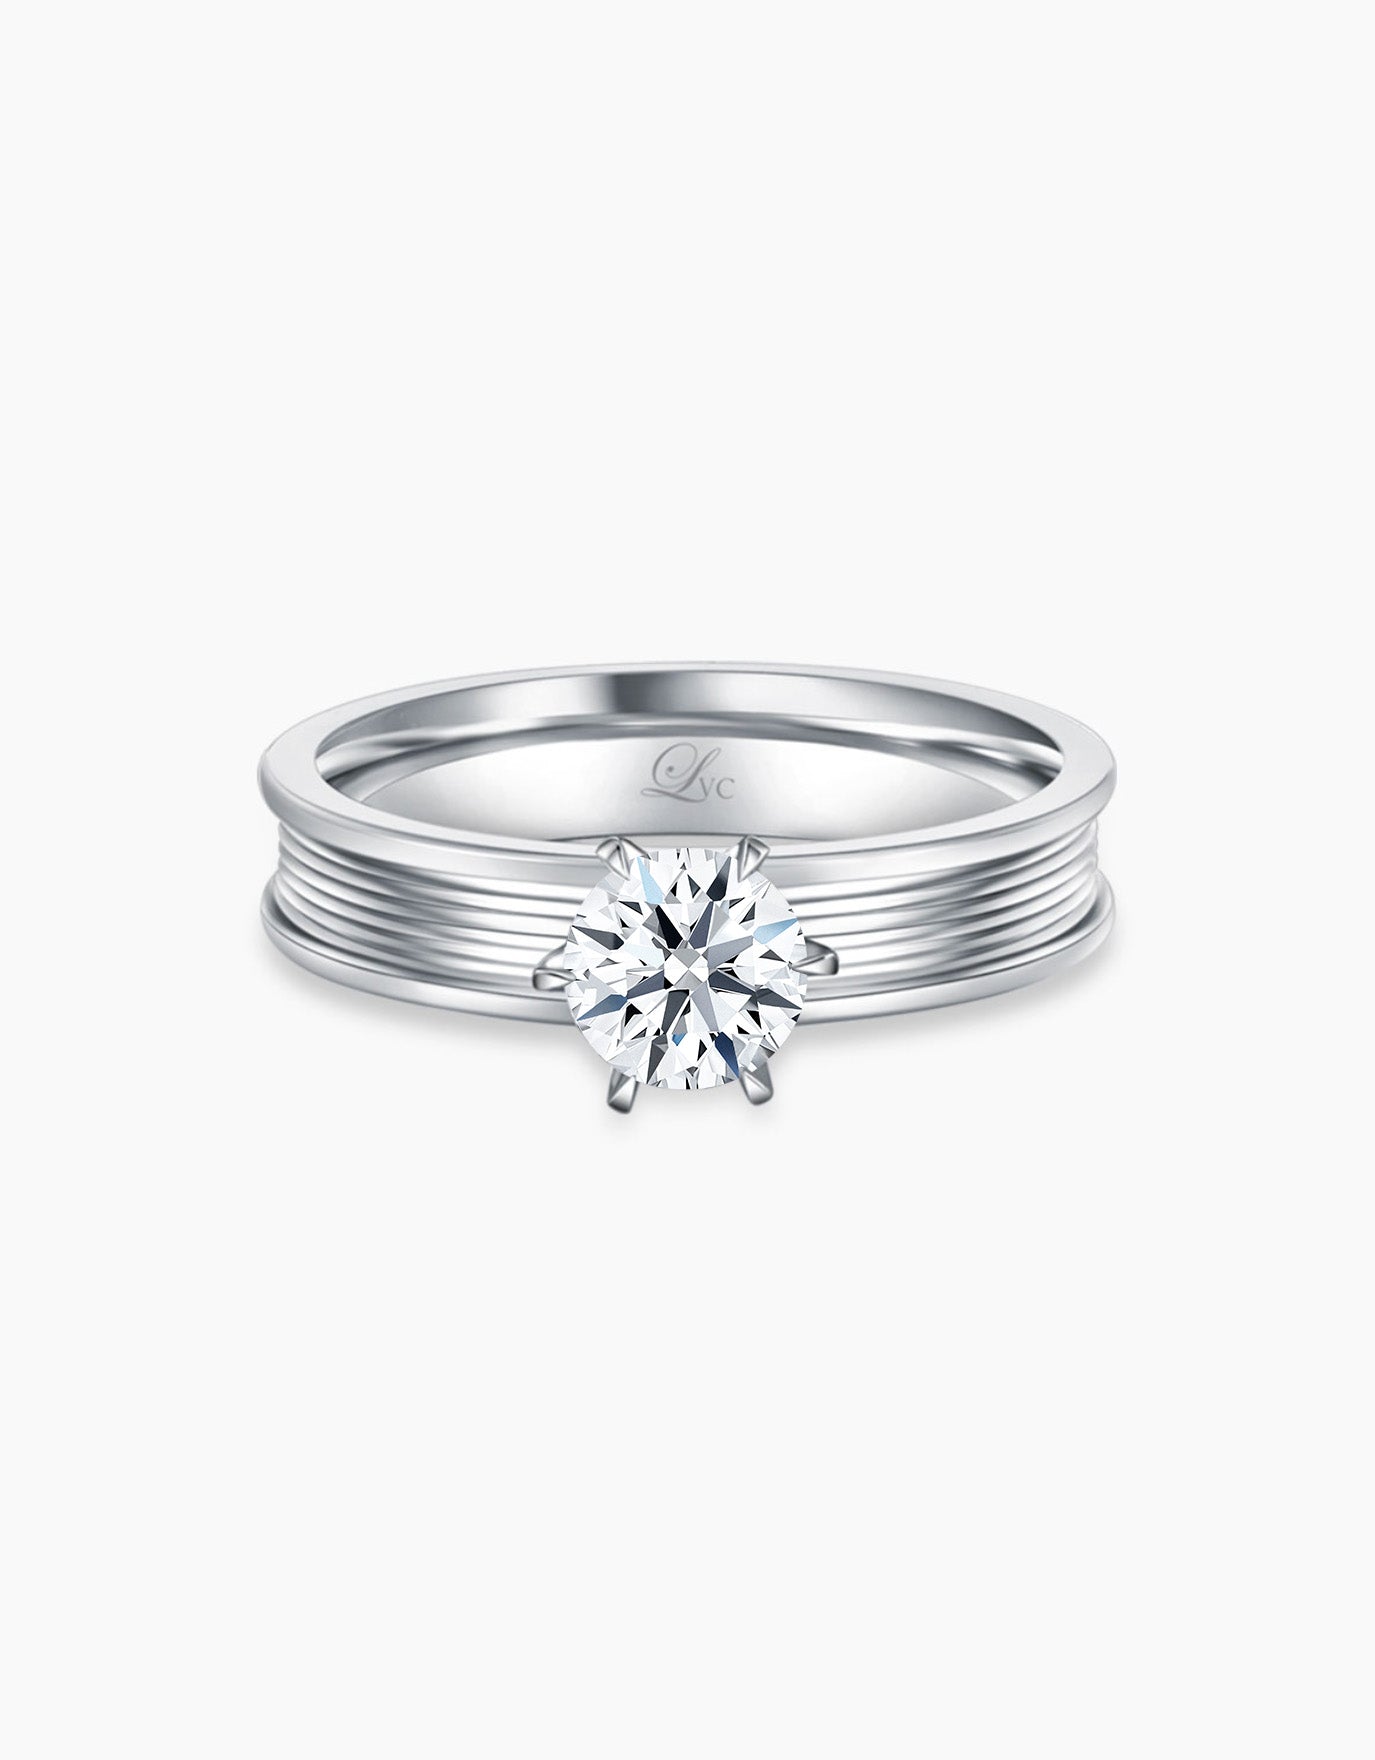 LVC Precieux Promise (Slim) Diamond Ring in 6 prongs